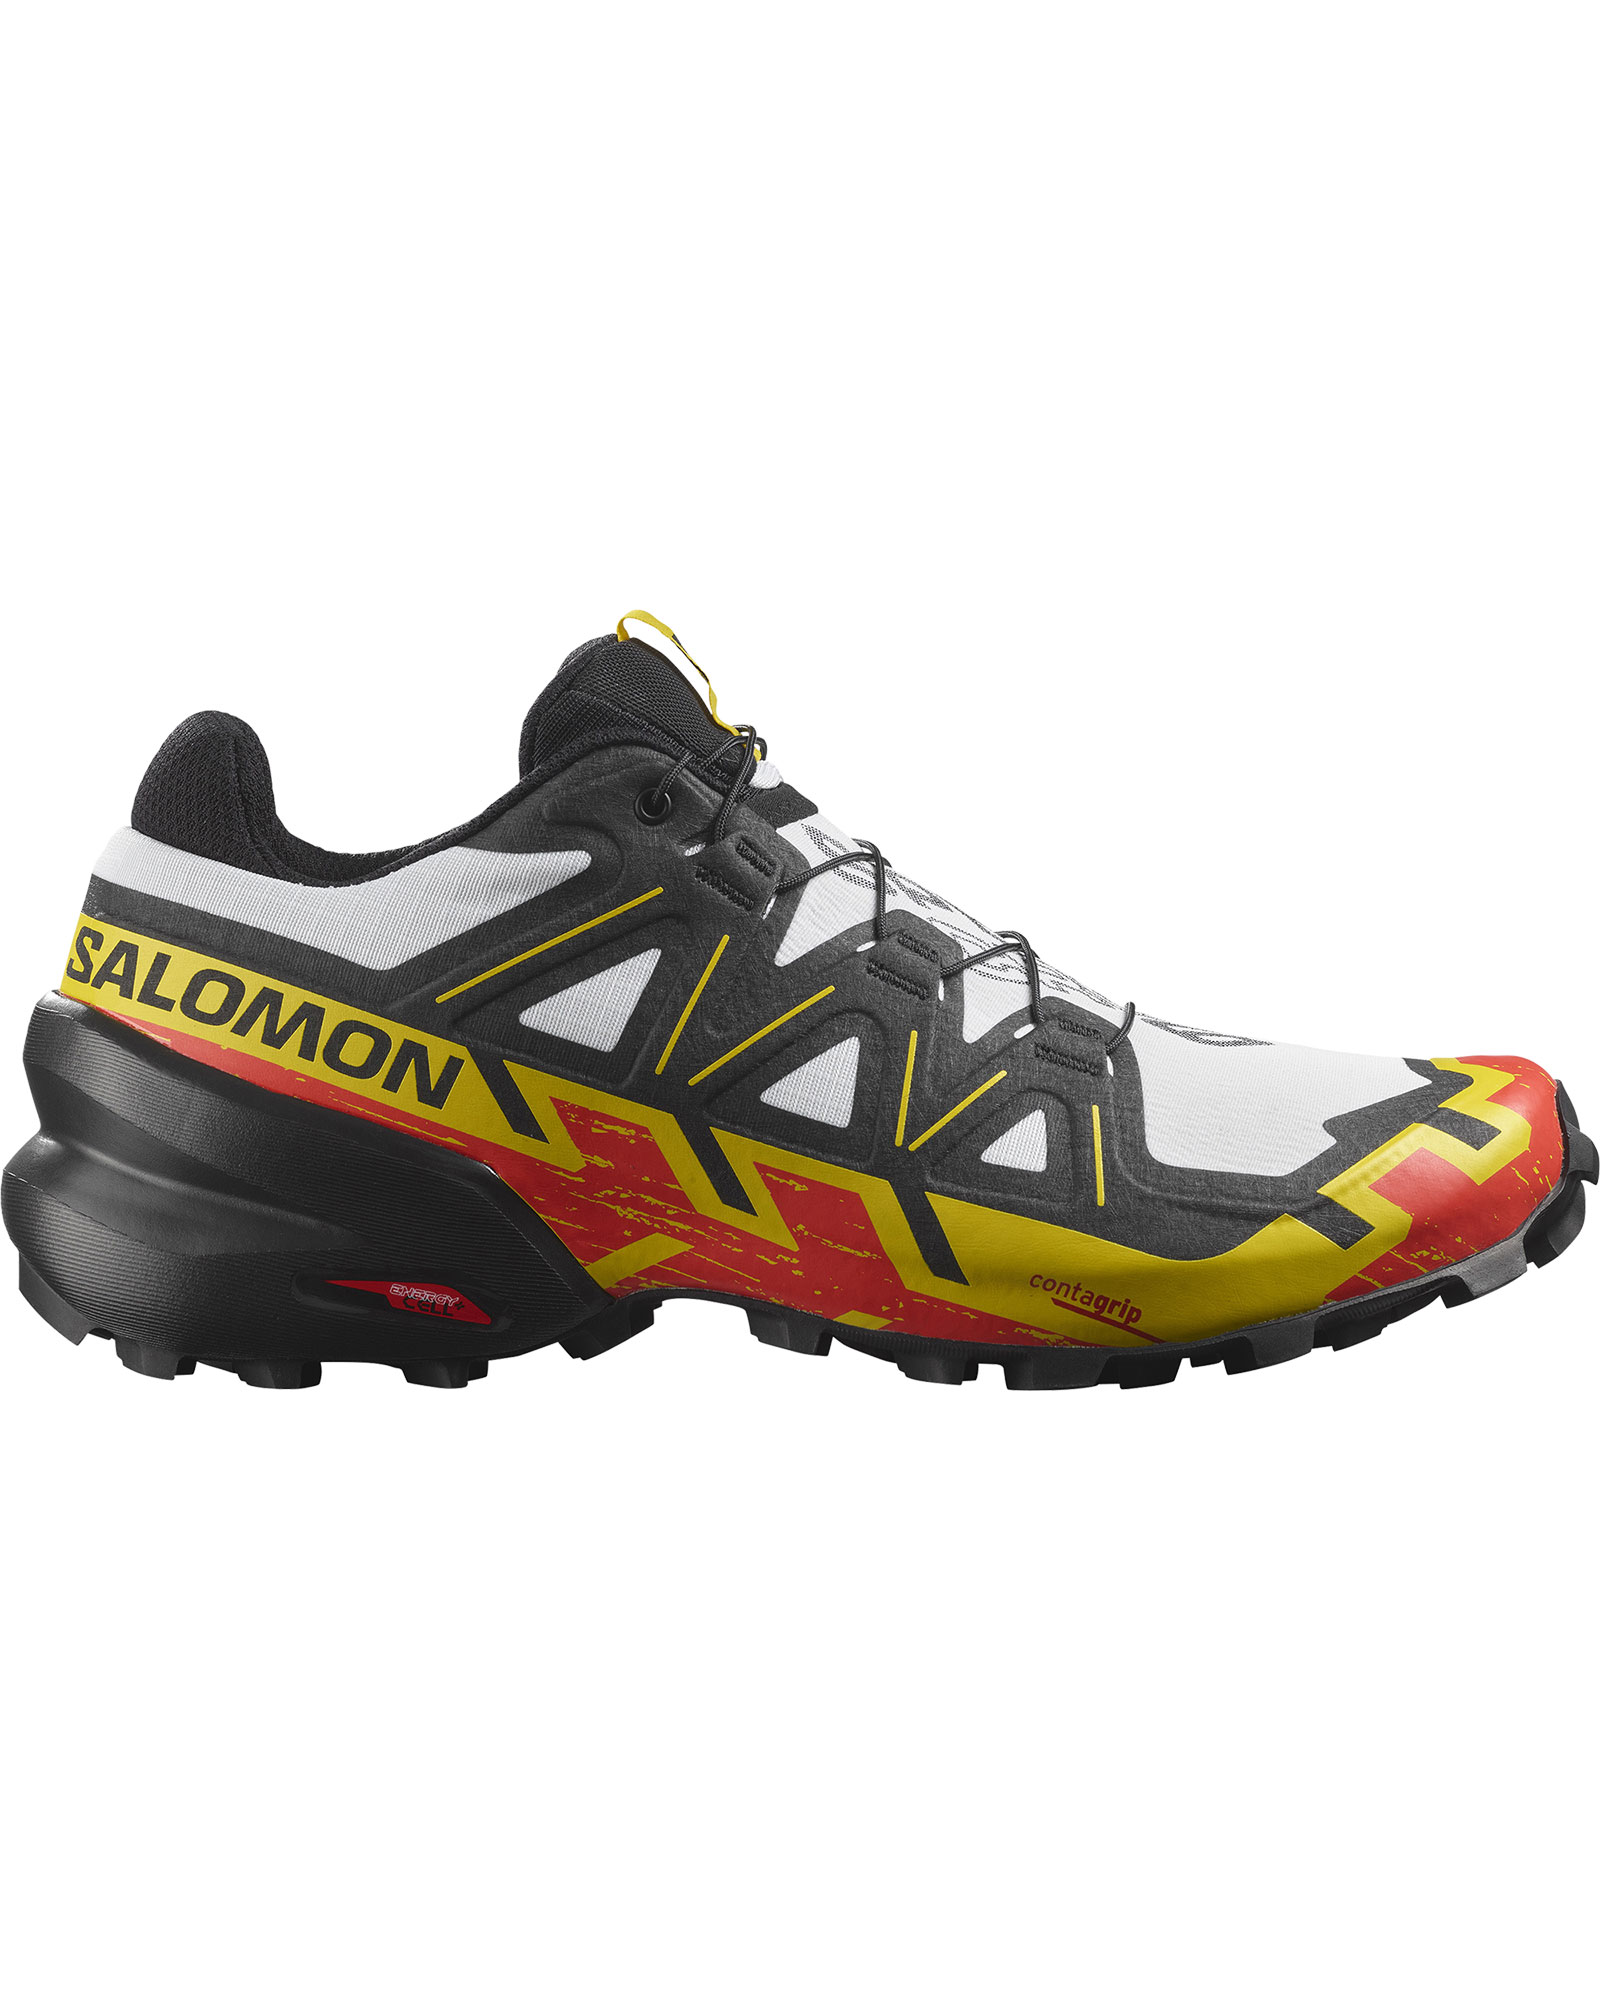 Salomon Speedcross 6 Men’s Shoes - White/Black/Empire Yellow UK 9